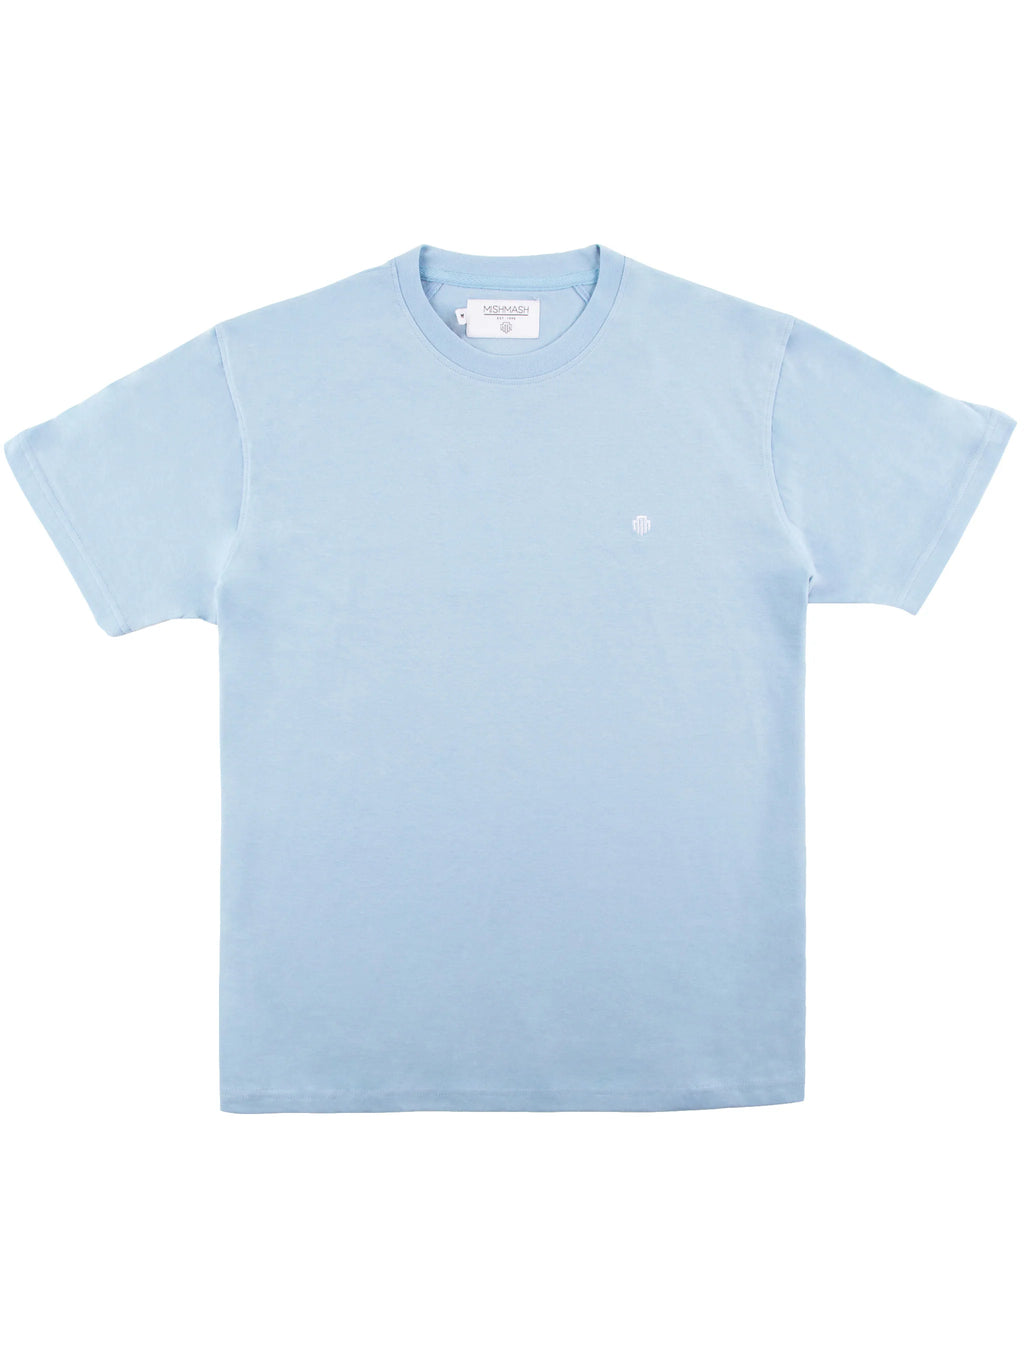 Mish Mash Adaman Sky Blue Classic T-Shirt